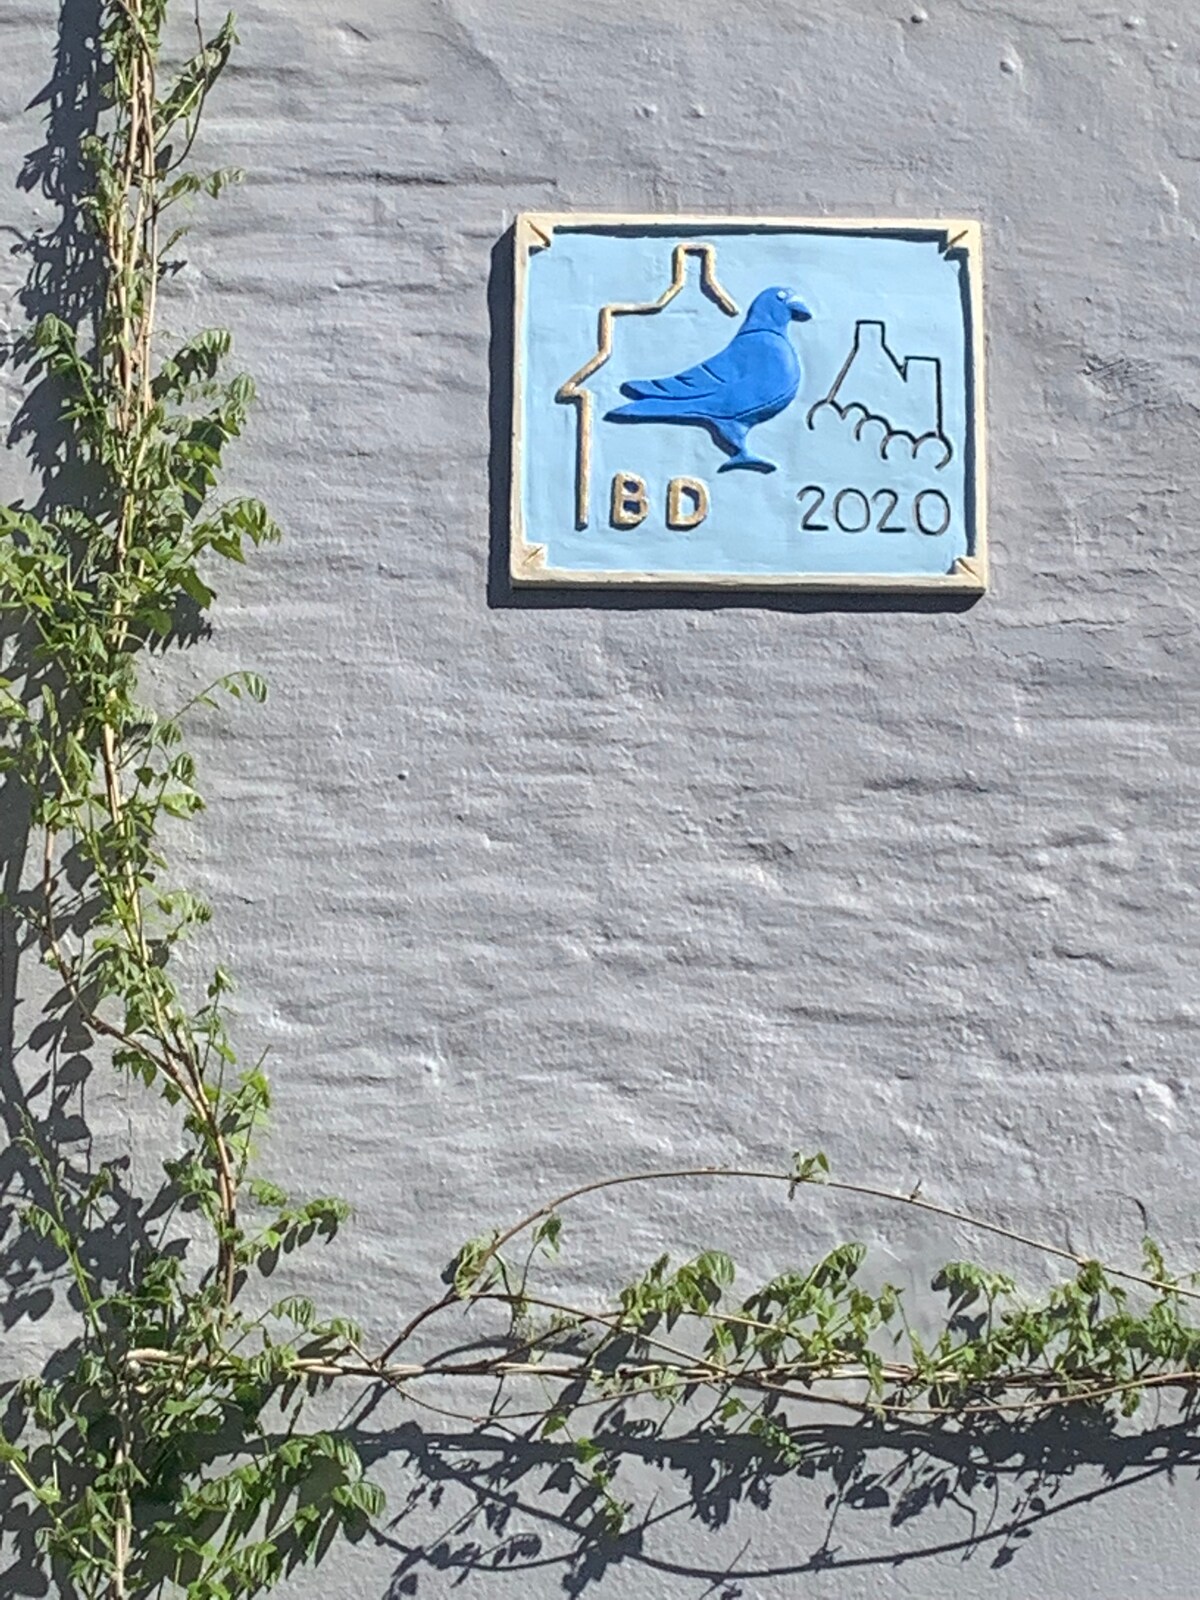 The Blauwe Doffer. Holliday in Harlingen